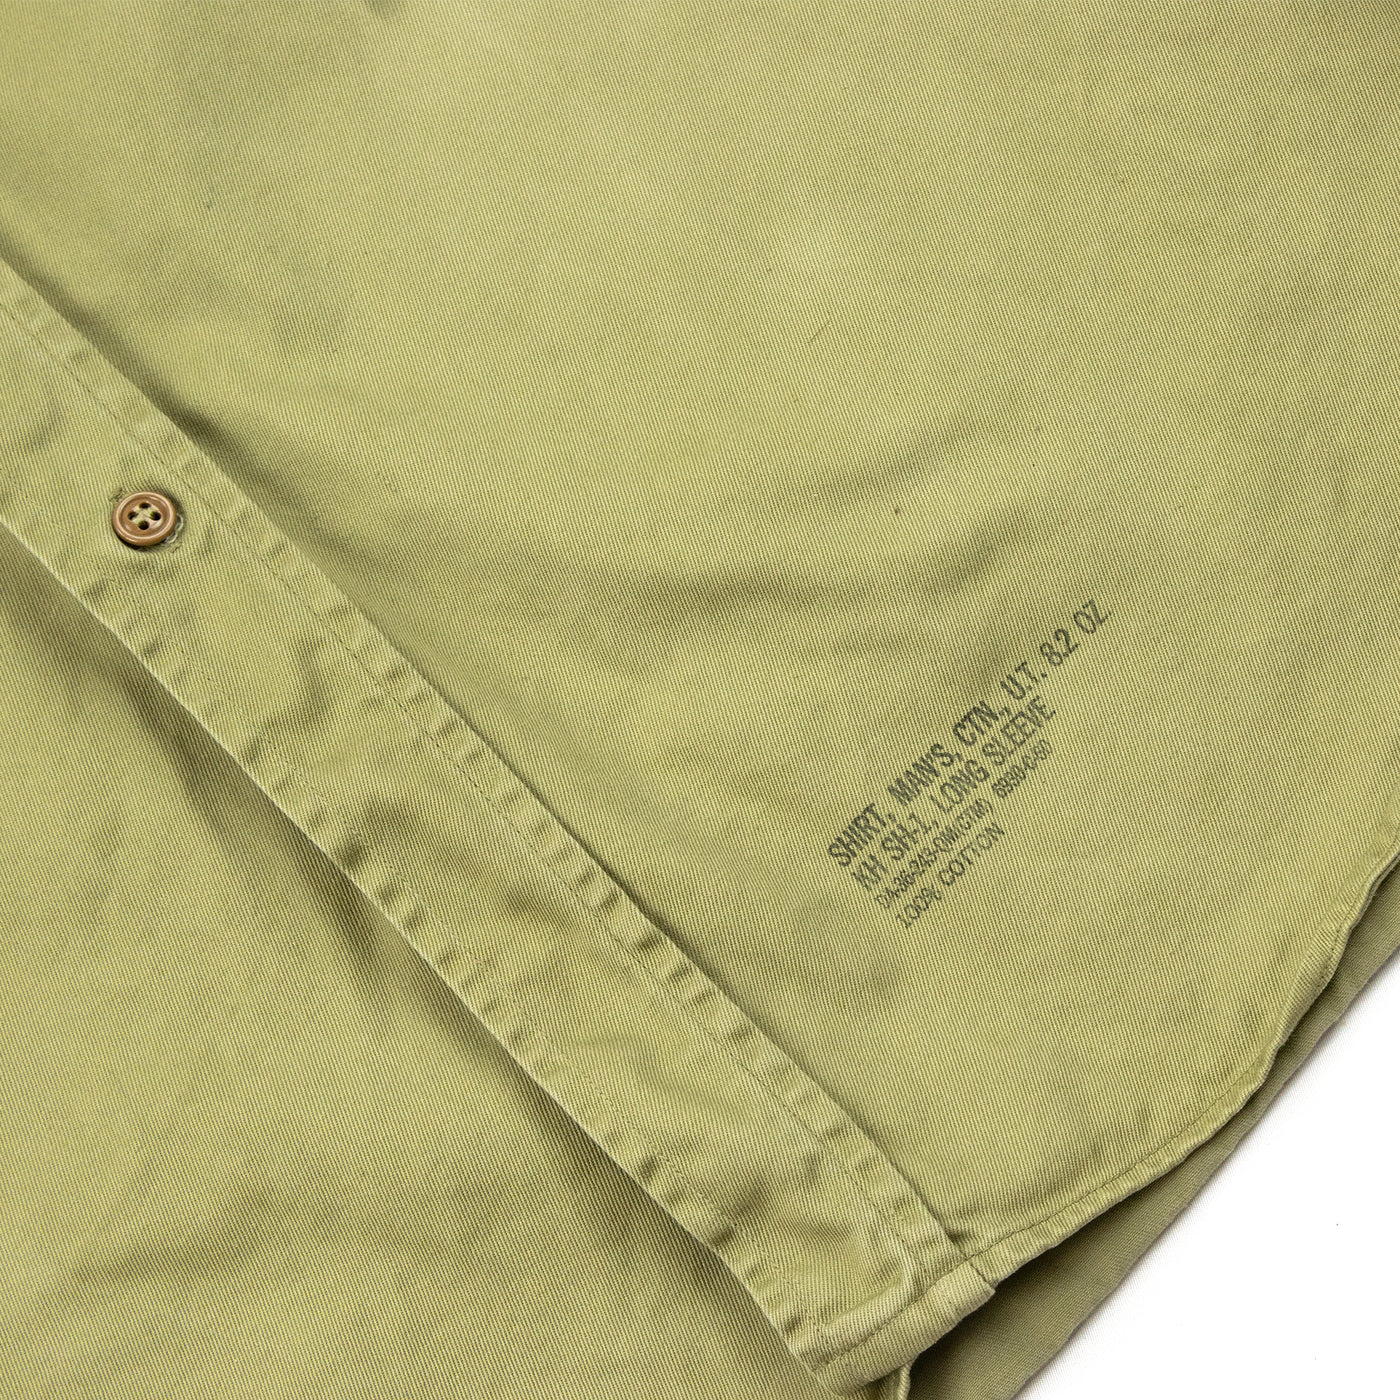 Vintage 60s Vietnam War Era US Army Khaki Cotton Twill Military Summer Shirt M / L STAMP